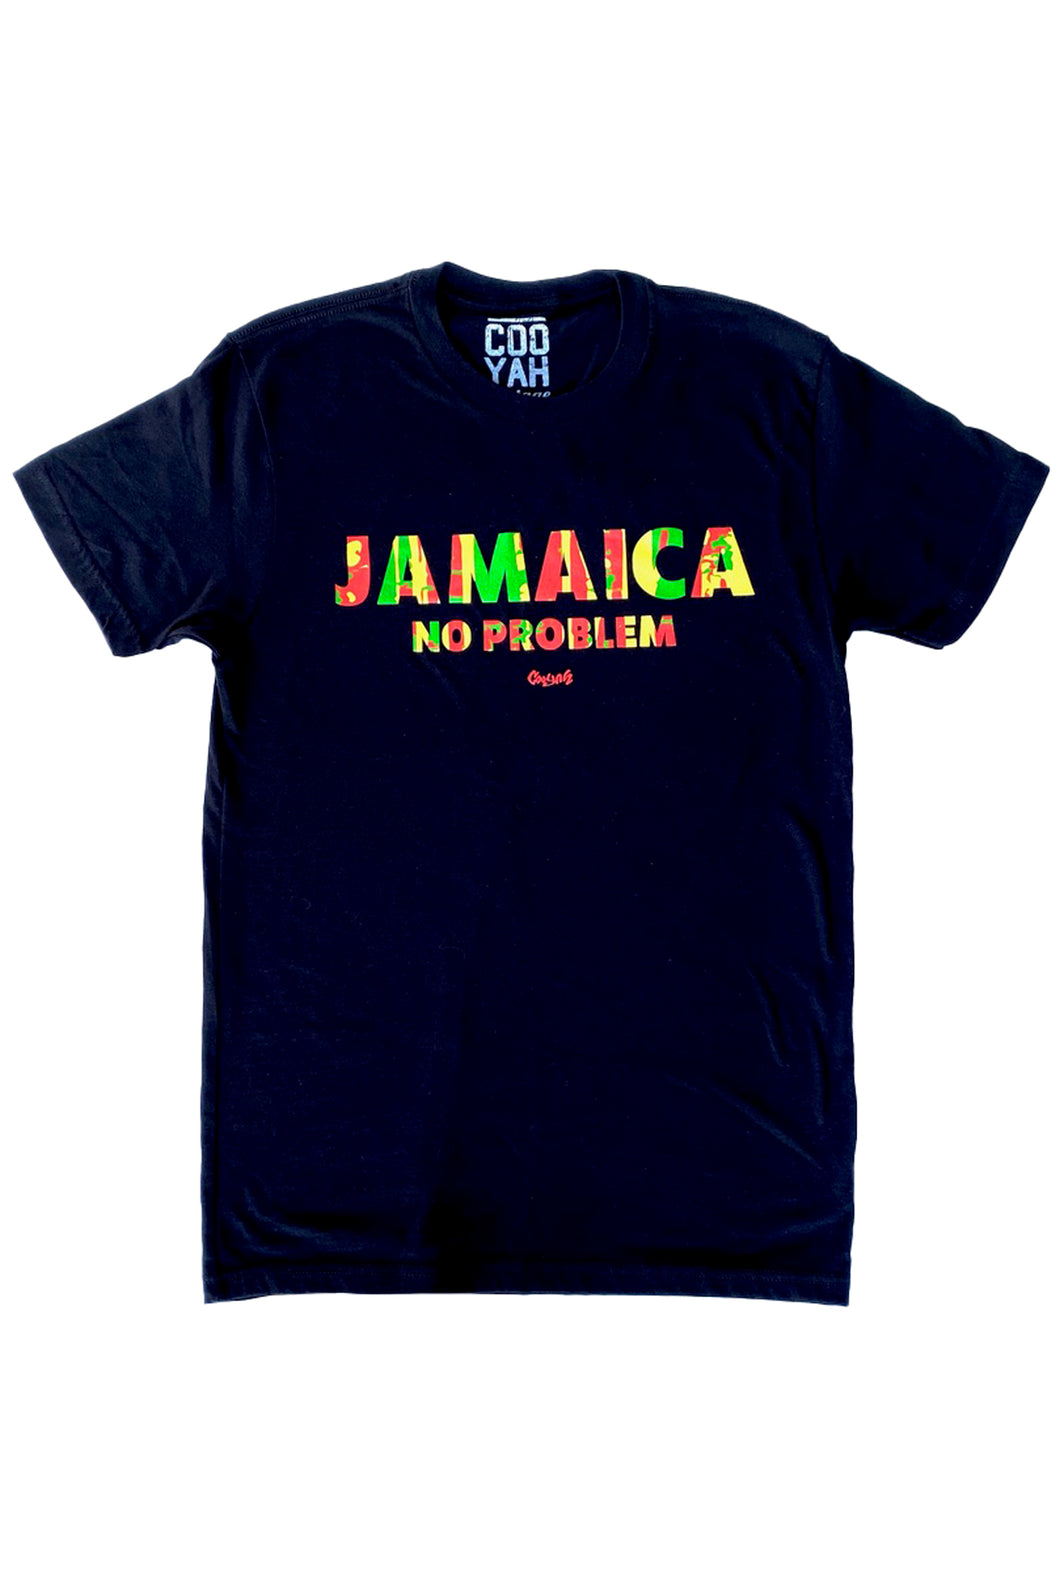 Cooyah Clothing. Jamaica No Problem men's graphic tee in black. Reggae style design on a short sleeve rinspun cotton t-shirt. Jamaican menswear fashion.